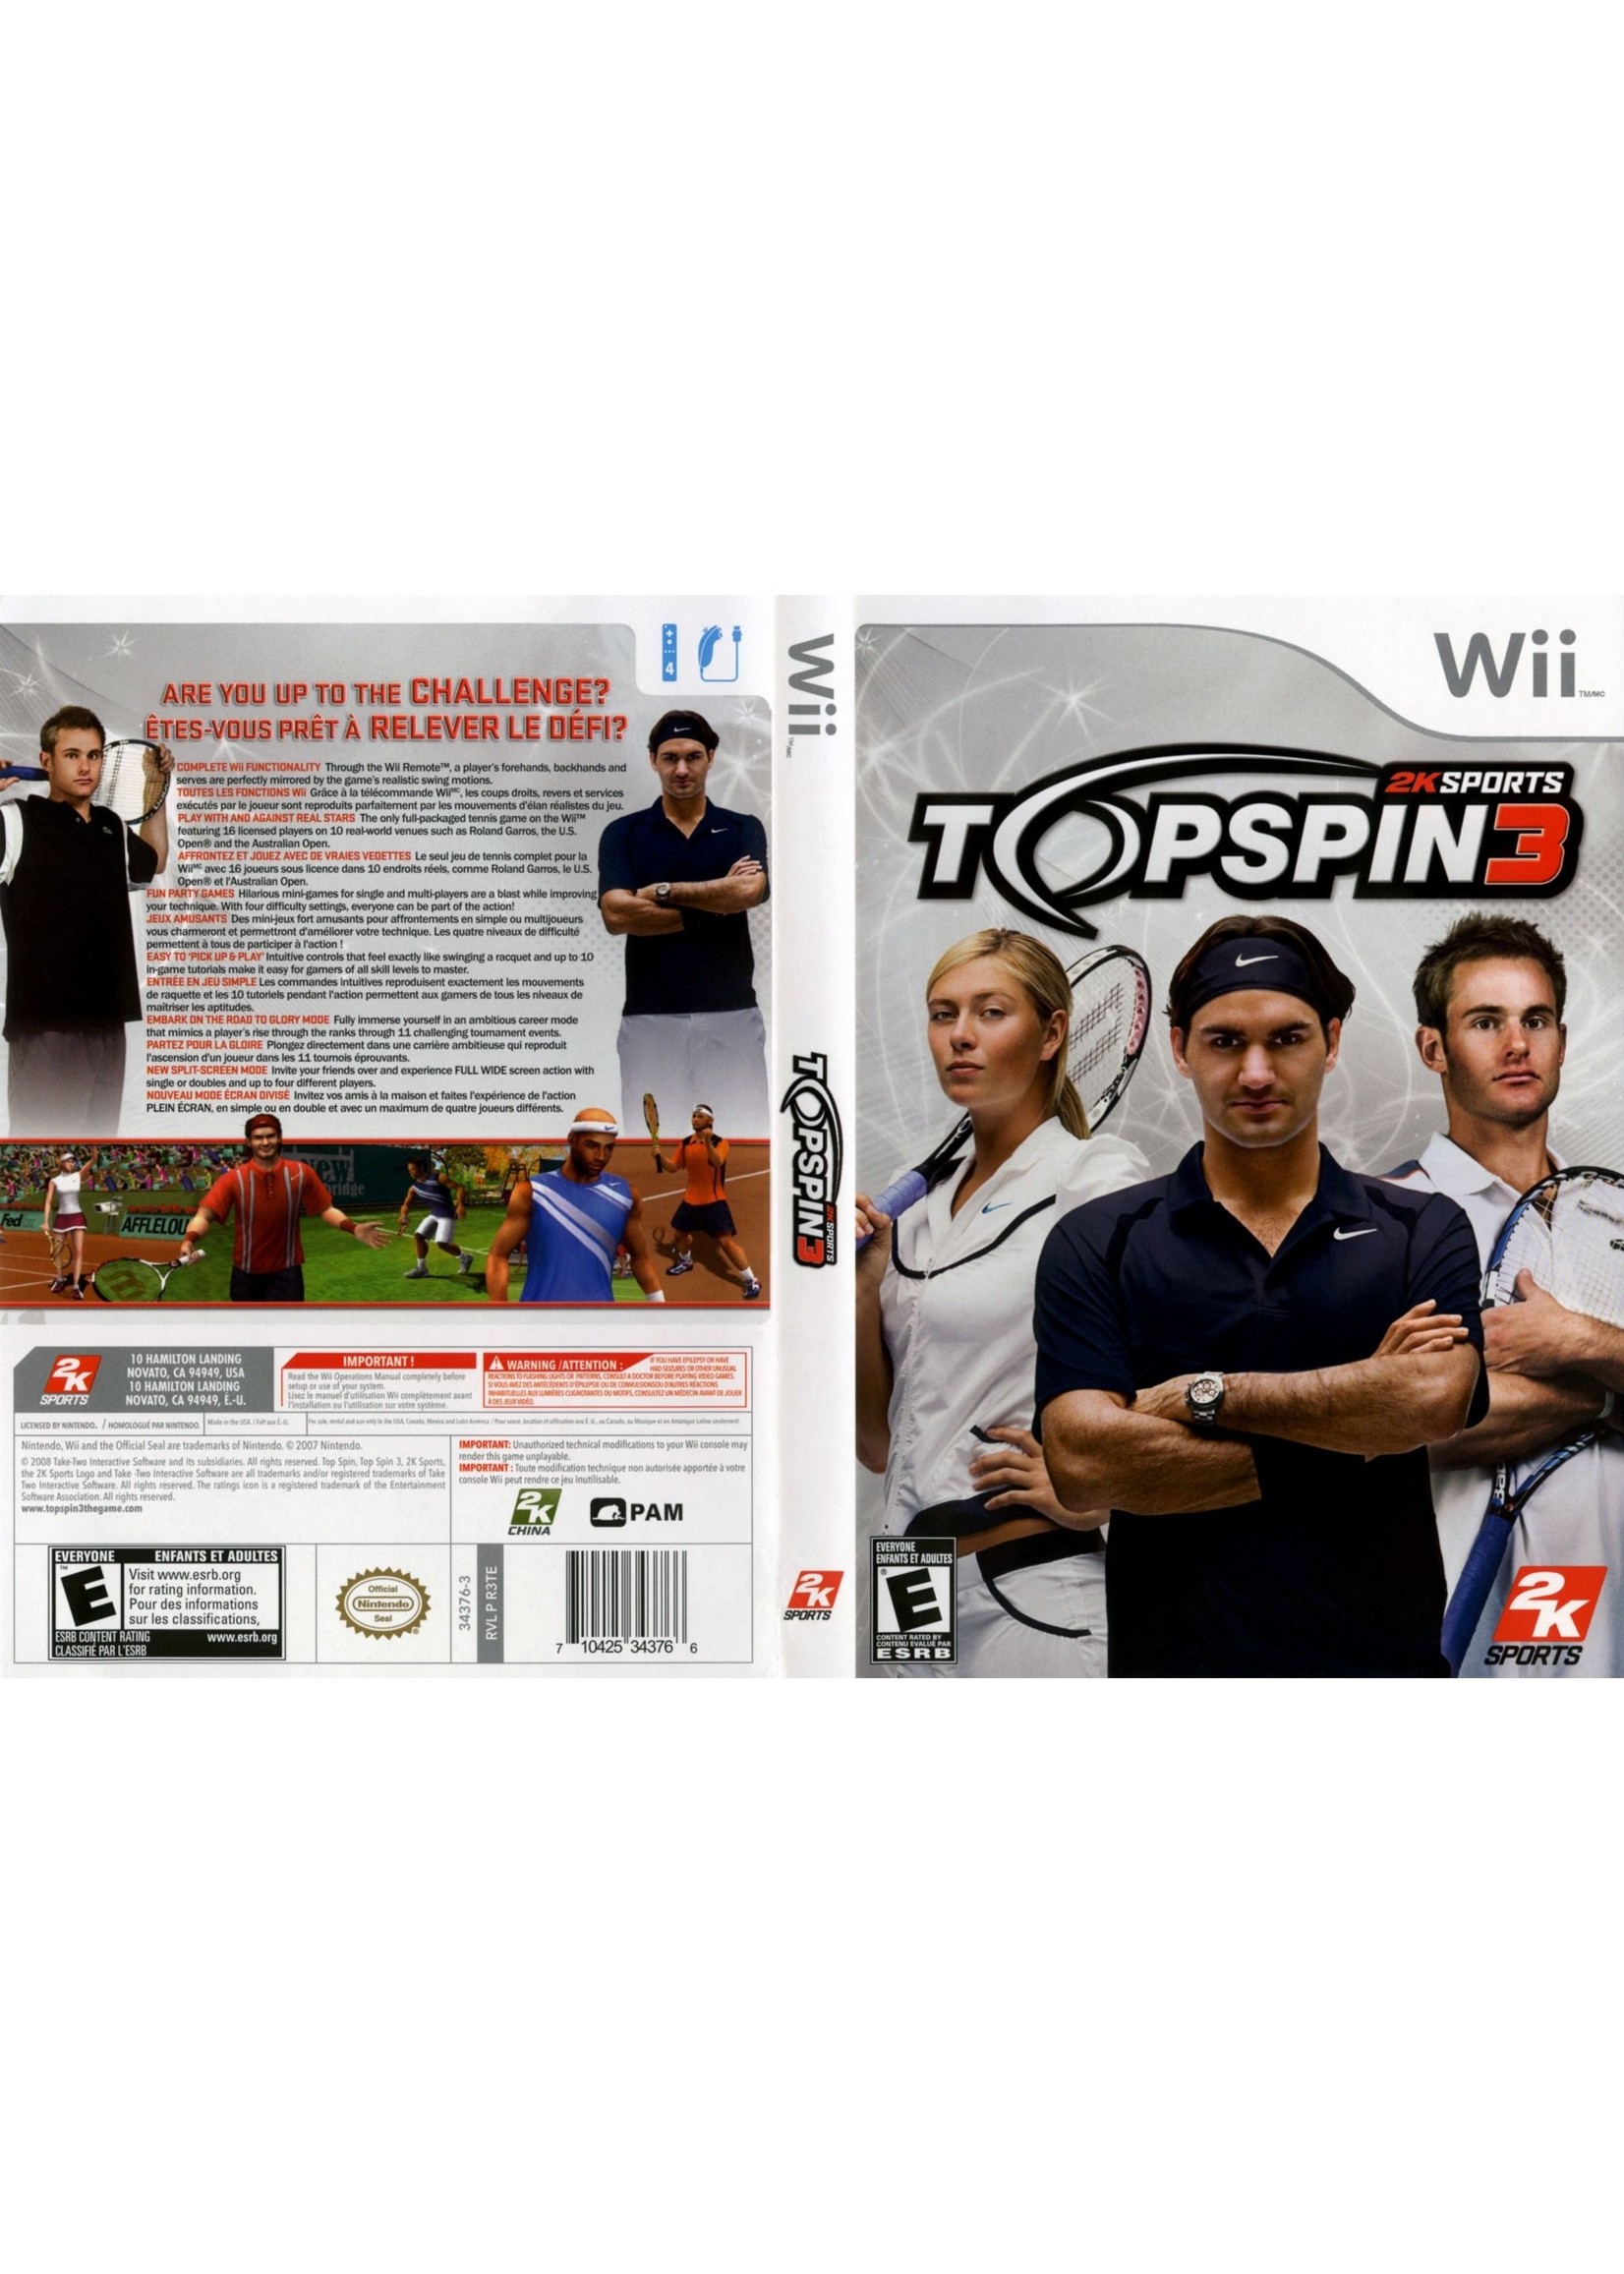 Nintendo Wii Top Spin 3